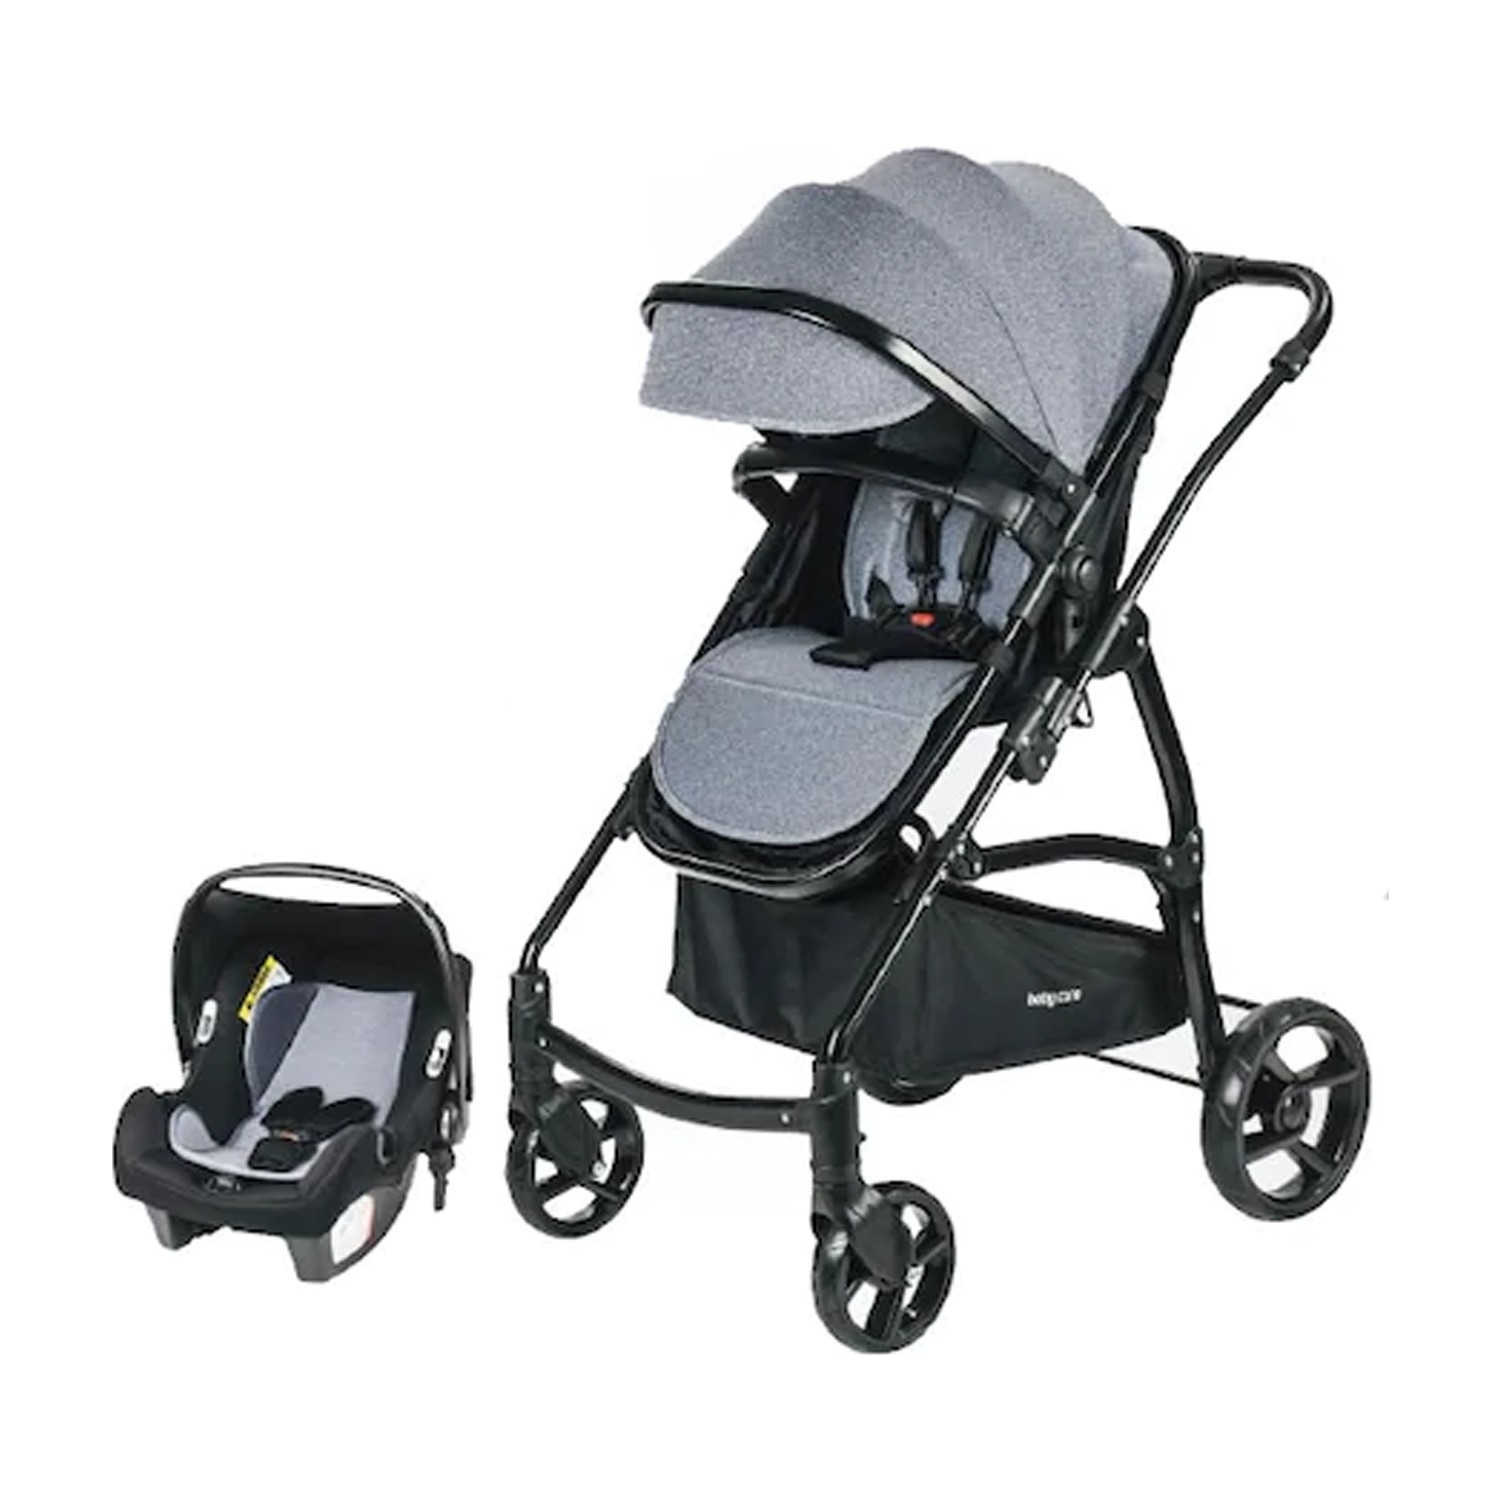 Babycare BC 41 Astra Safe Trio Travel Bebek Arabası Gri Siyah